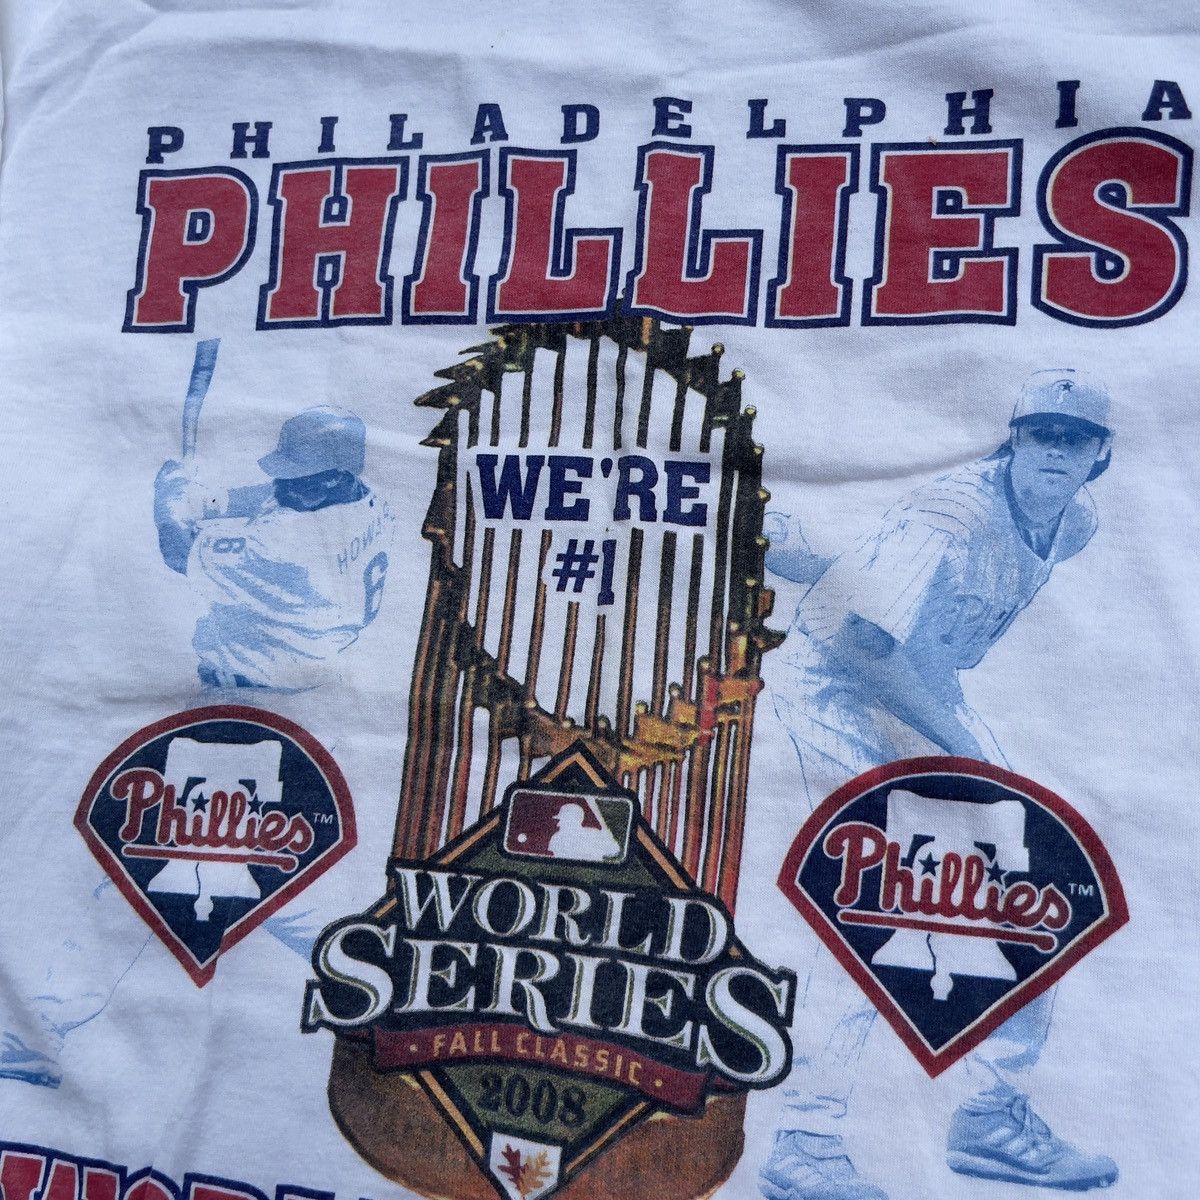 Vintage 2008 Philadelphia Fans Champions Sports Long Sleeve Shirt Size US XL / EU 56 / 4 - 3 Thumbnail